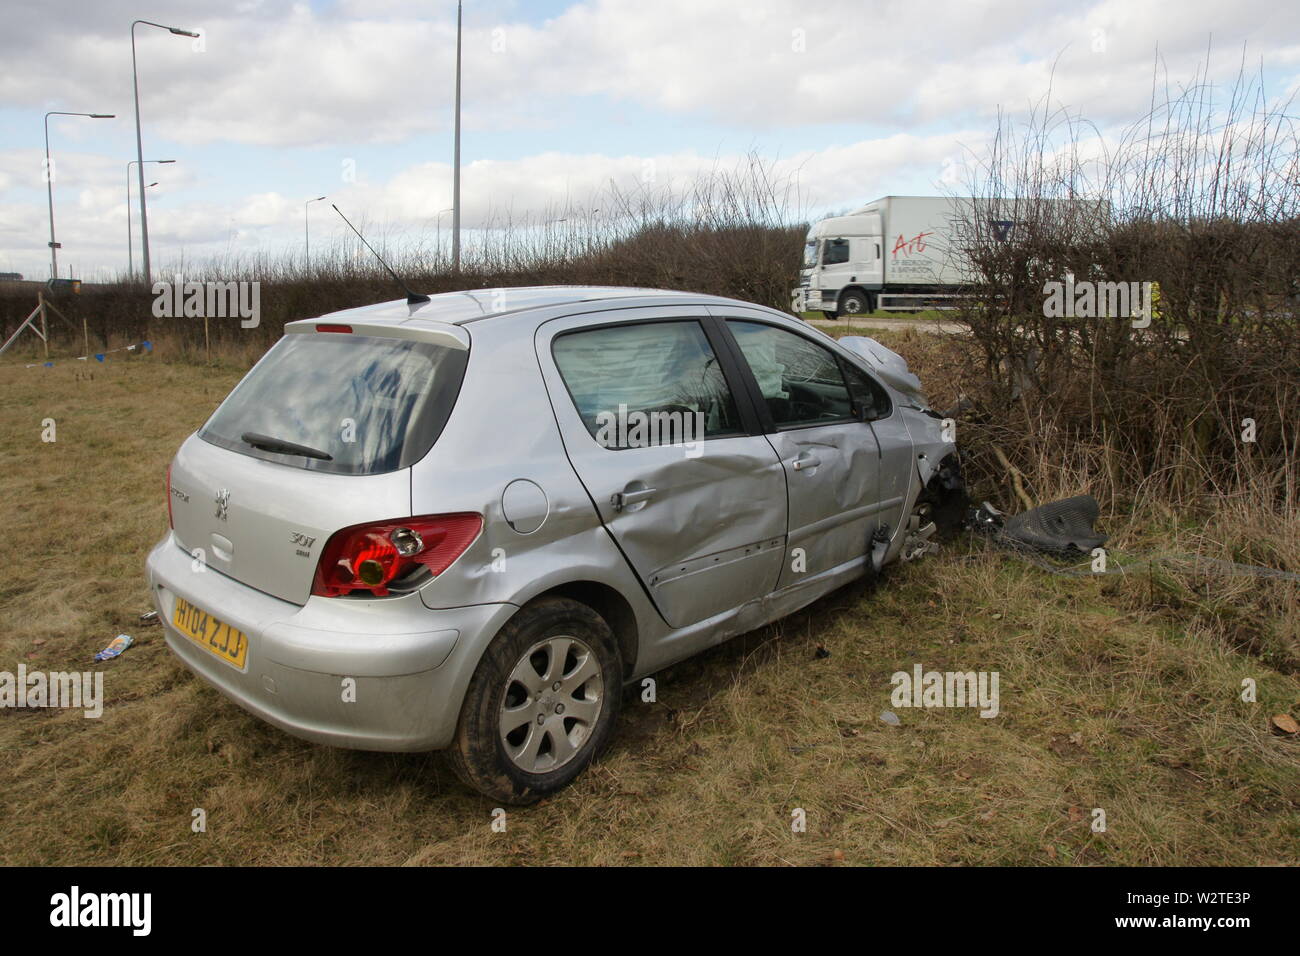 High speed car crash Stock Photo